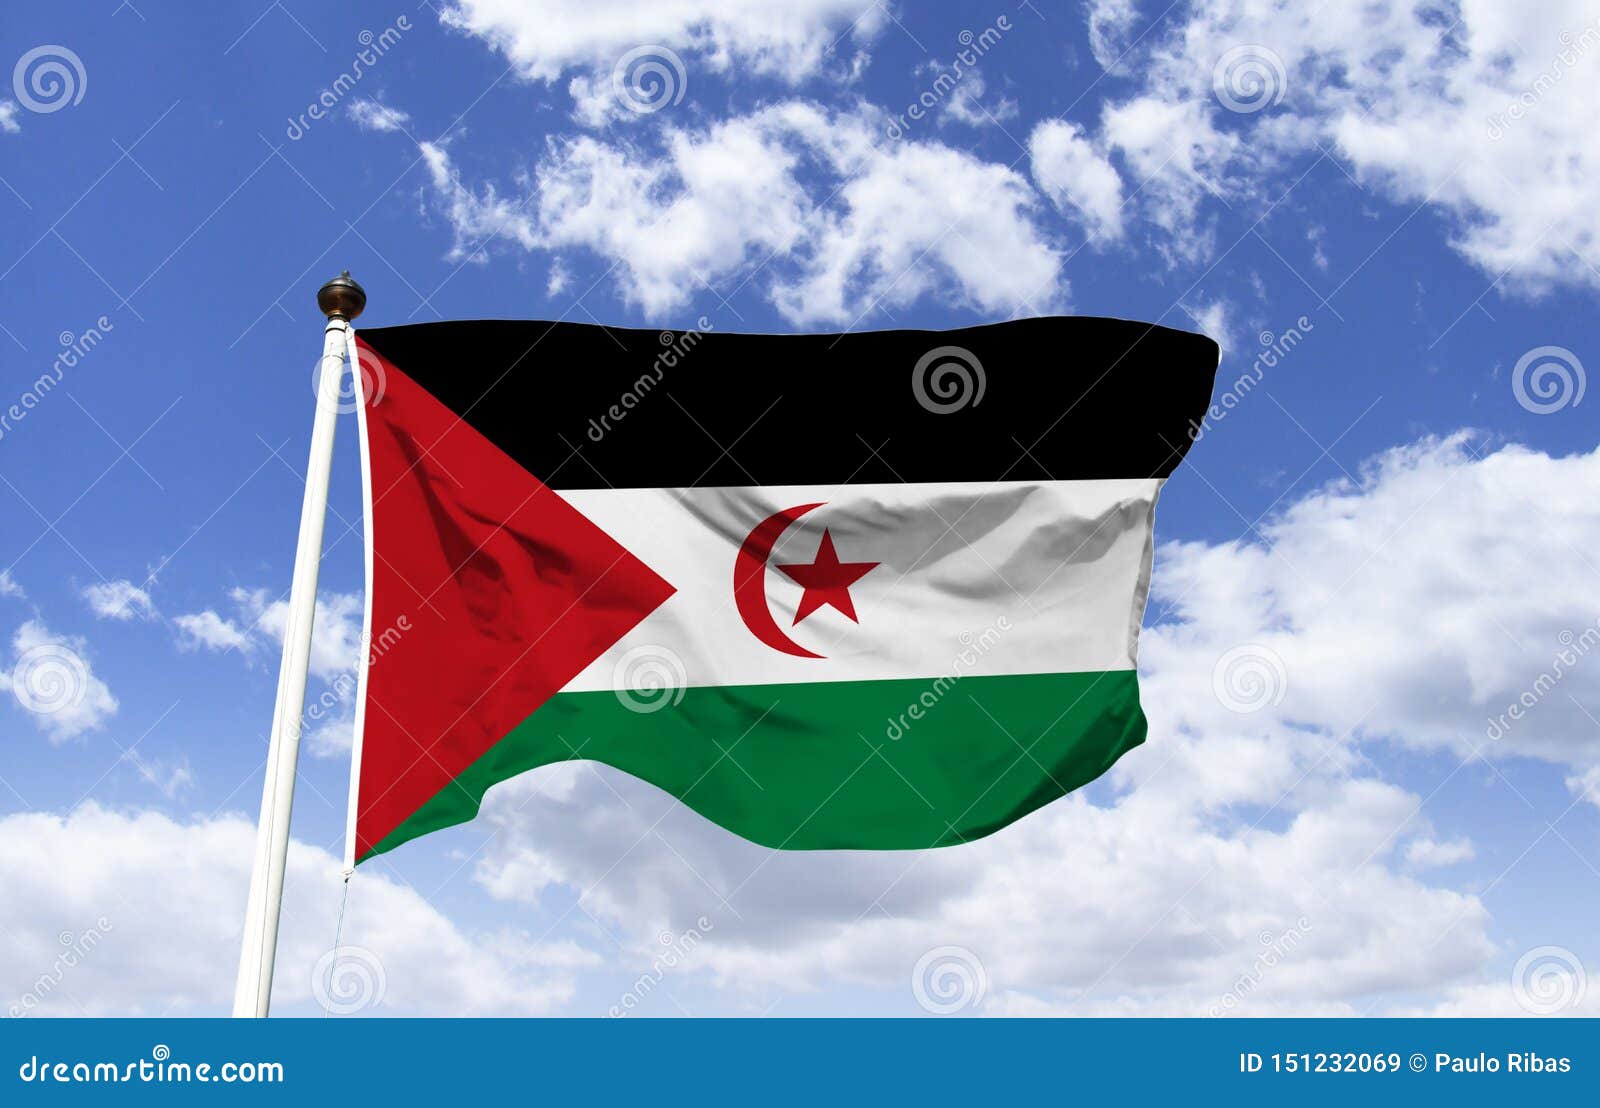 sang Forhandle hvor som helst Flag of the Sahrawi Arab Democratic Republic Stock Image - Image of  country, colors: 151232069